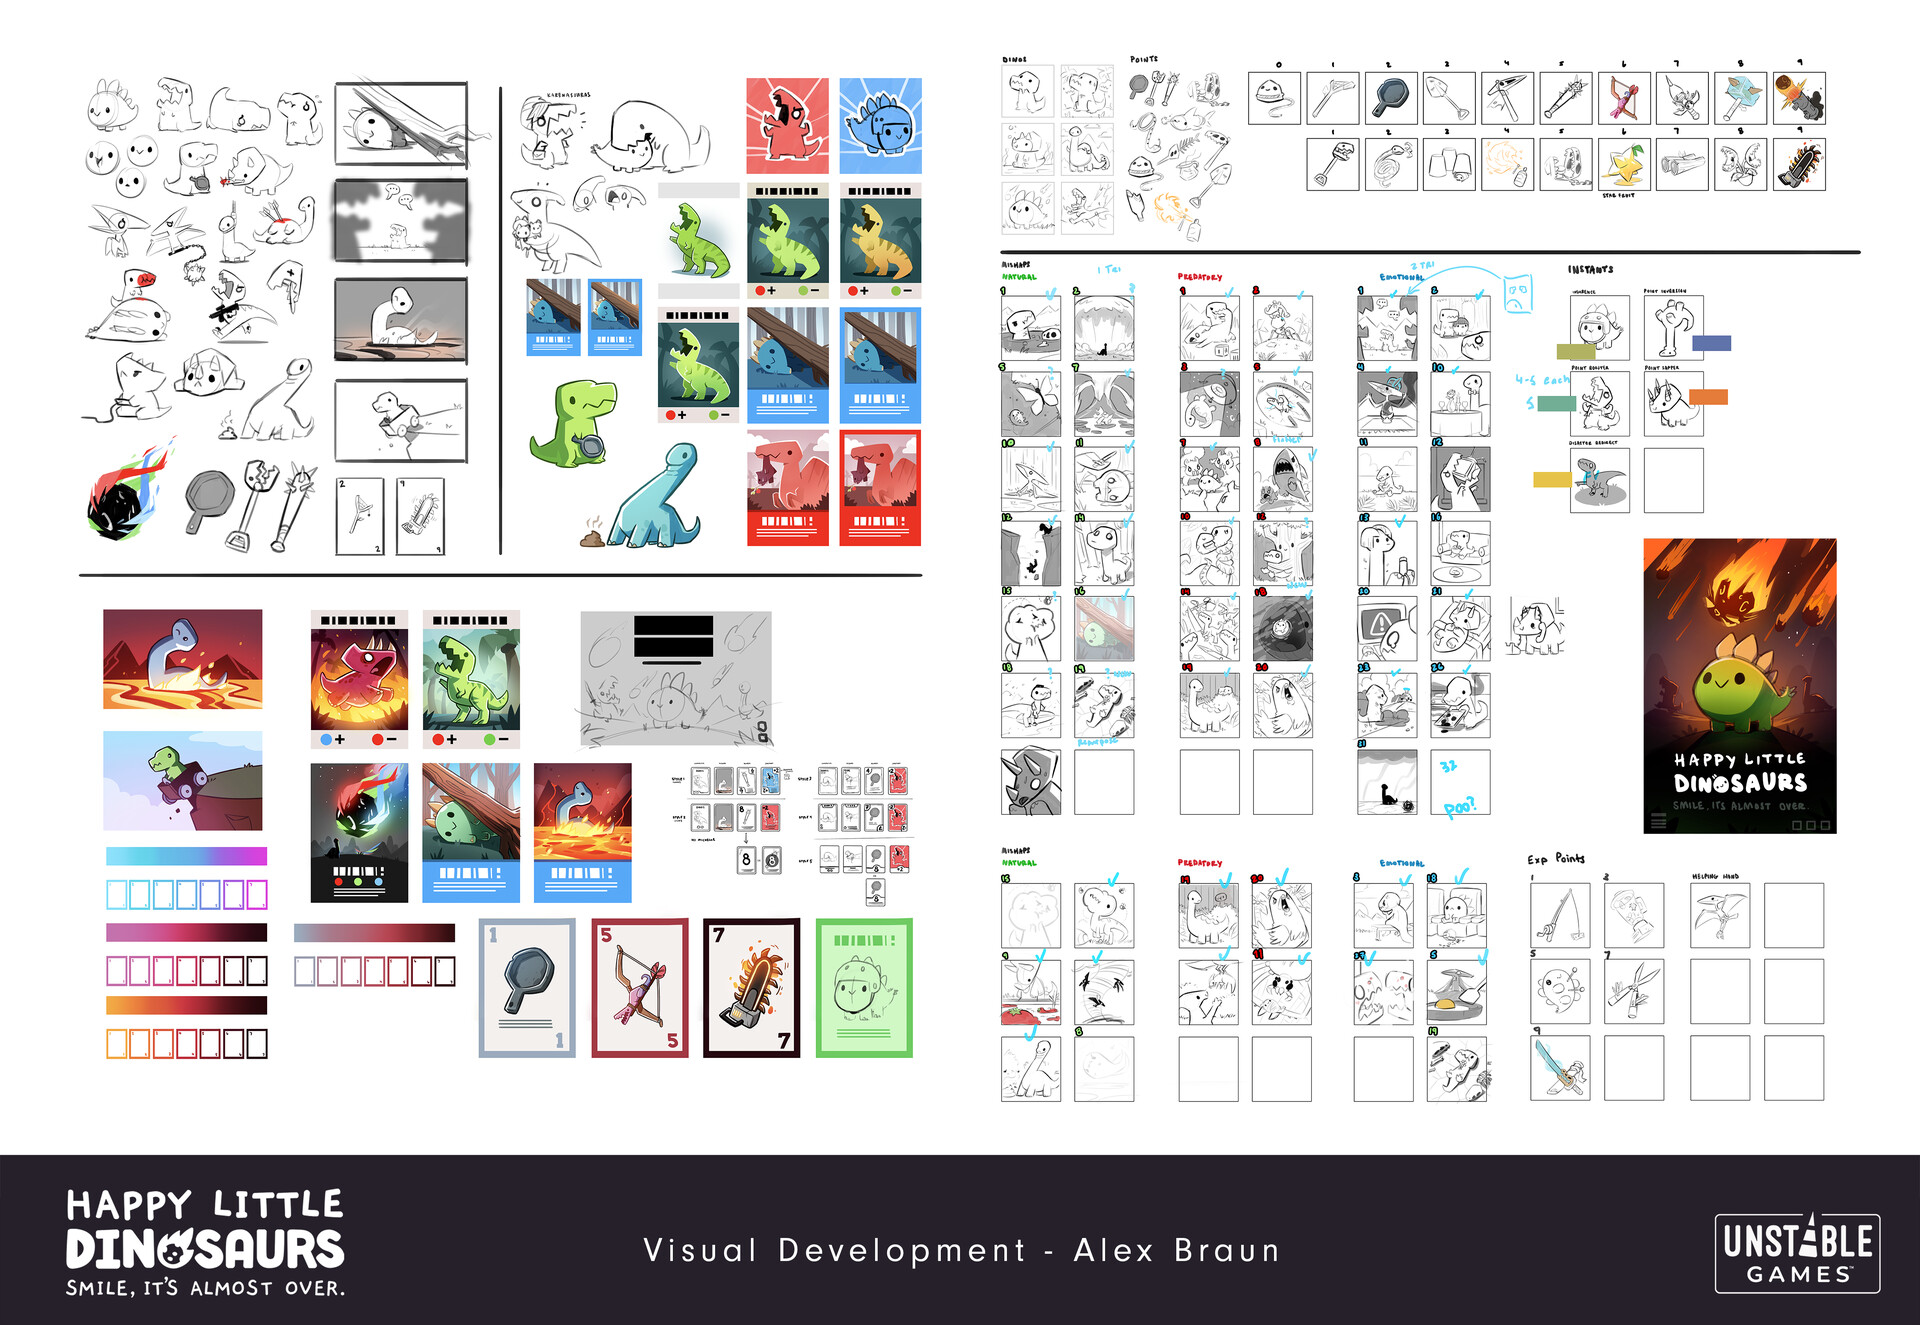 ArtStation - Happy Little Dinosaurs - Visual Development